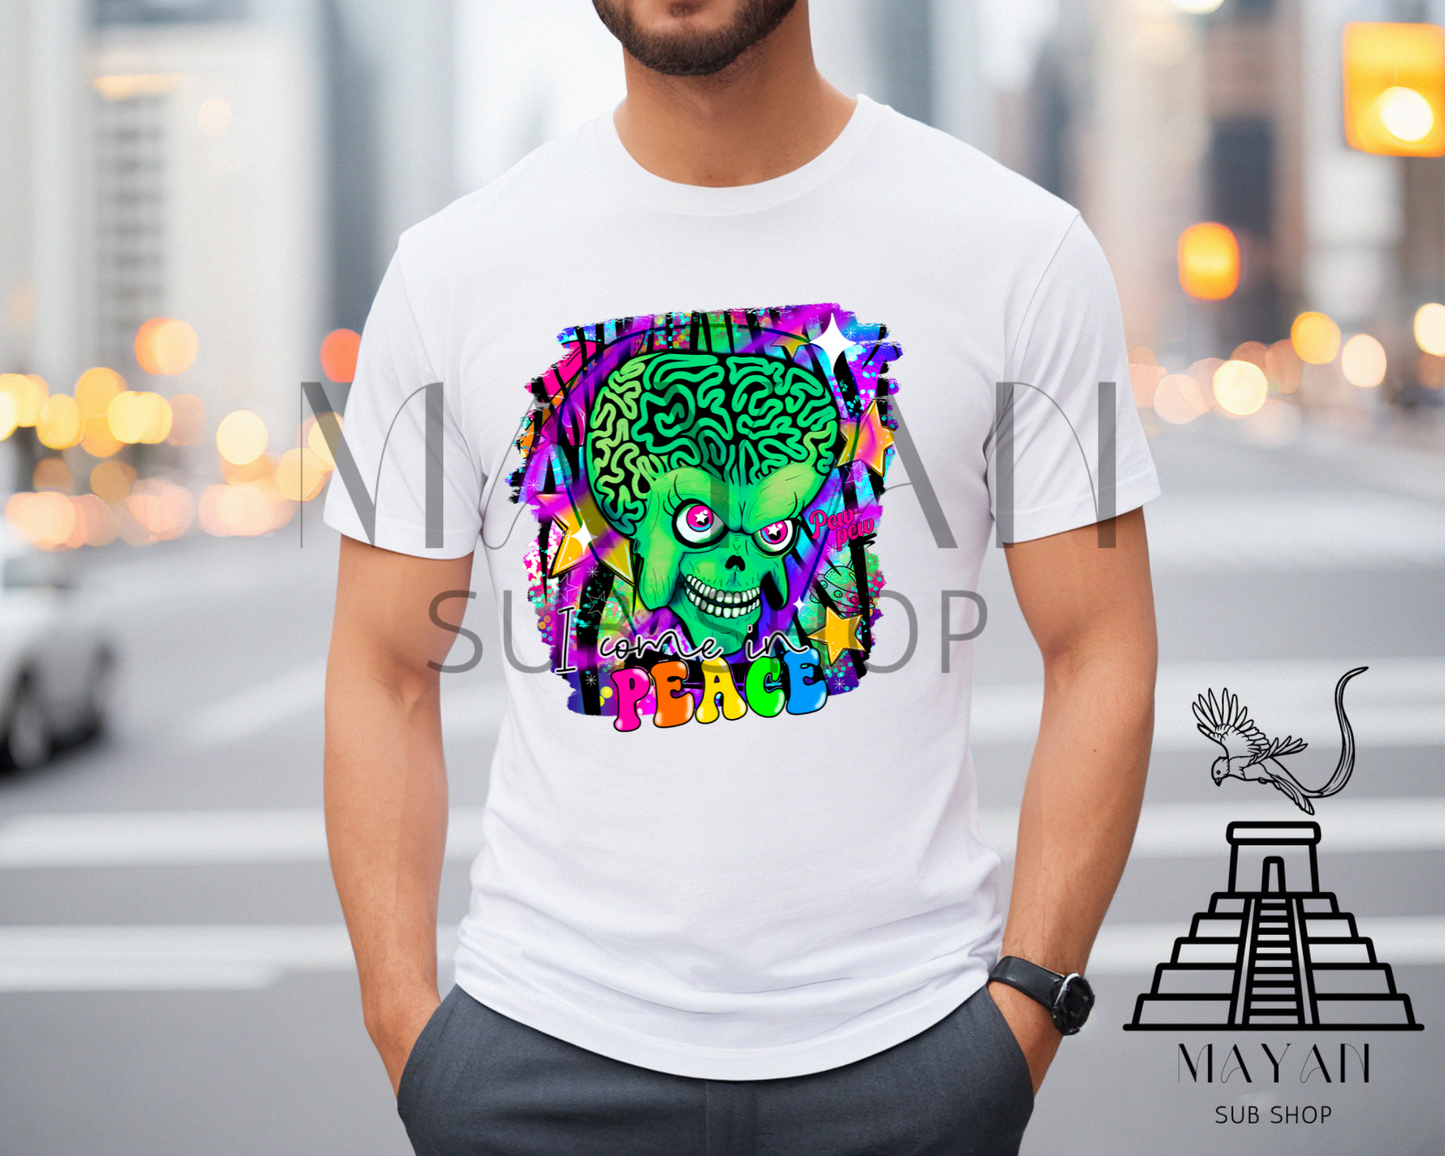 I come in peace shirt - Mayan Sub Shop